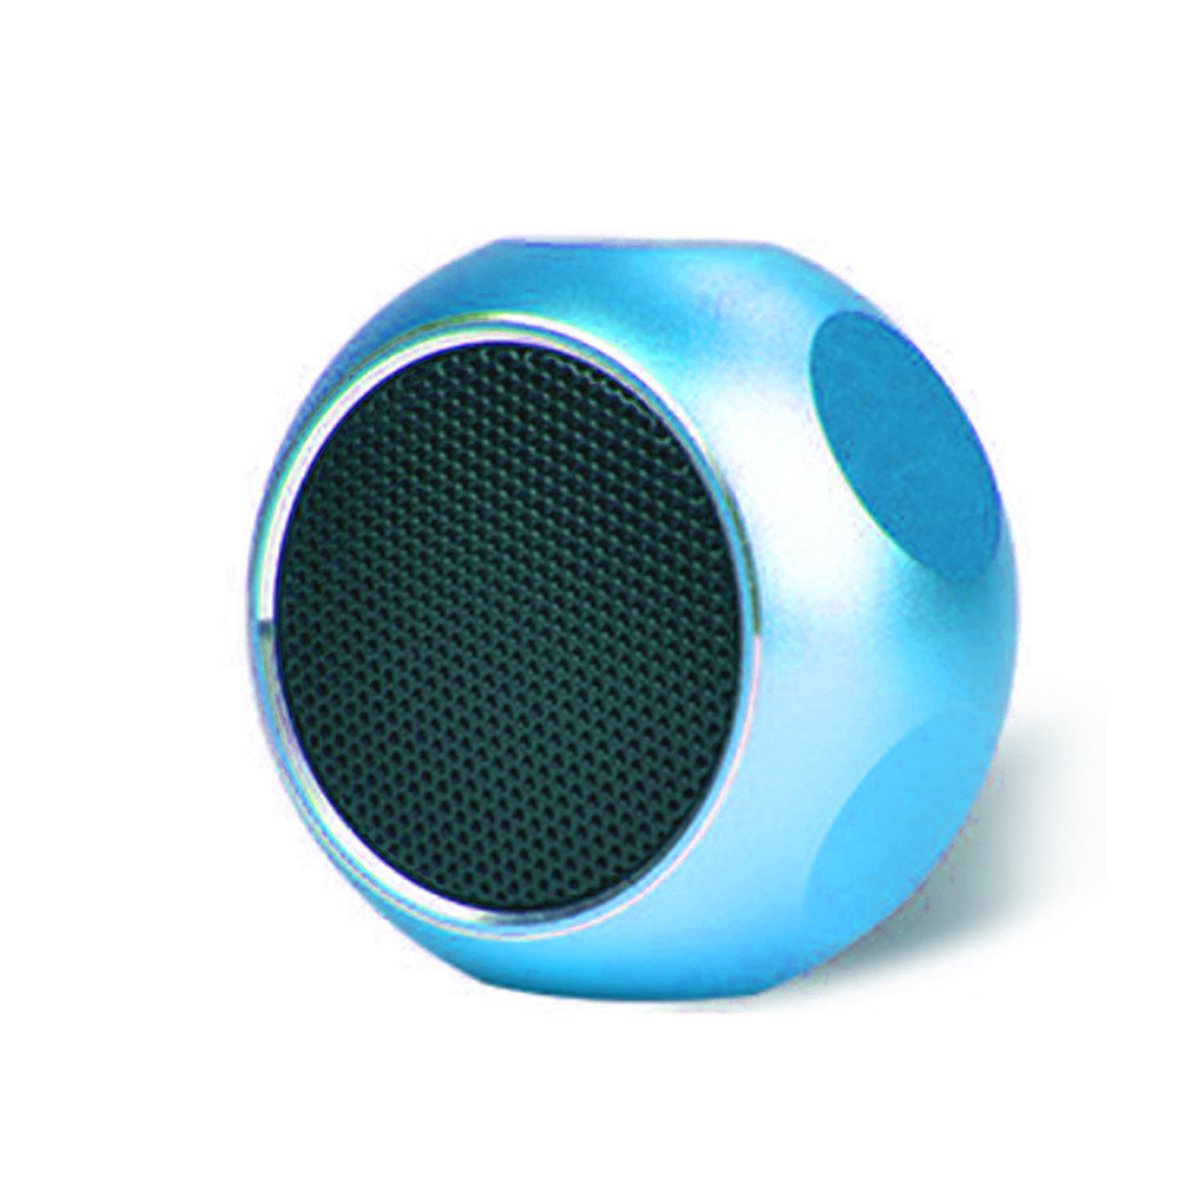 Big Sound Mini Speakers In 5 Colors - 4-3